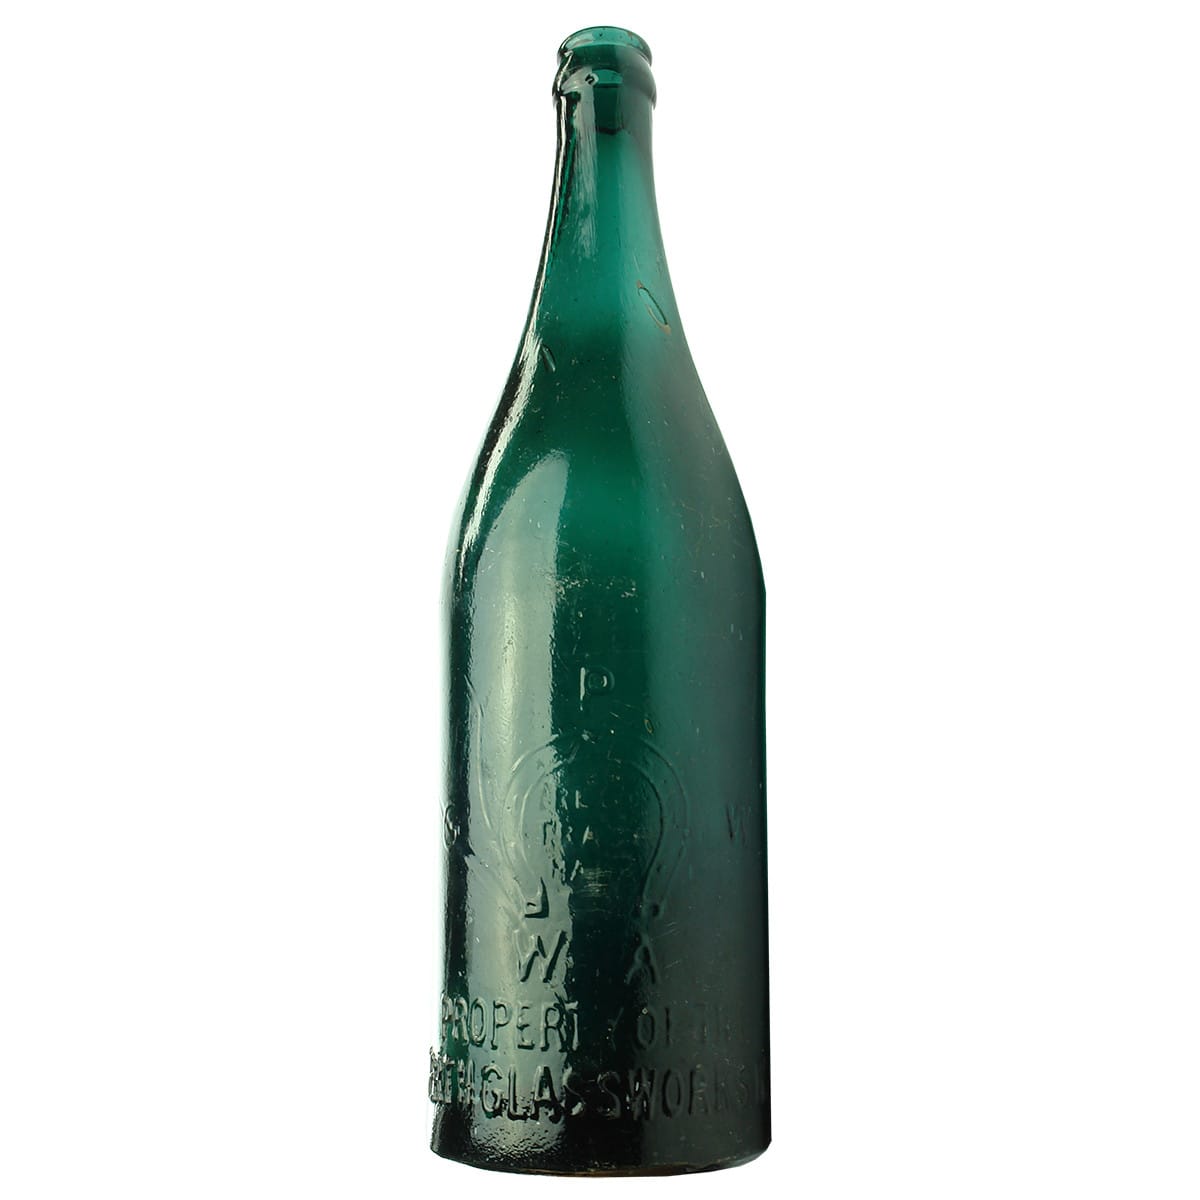 Crown Seal Beer. Perth Glassworks. Dark Blue-Green. 26 oz. (Western Australia)